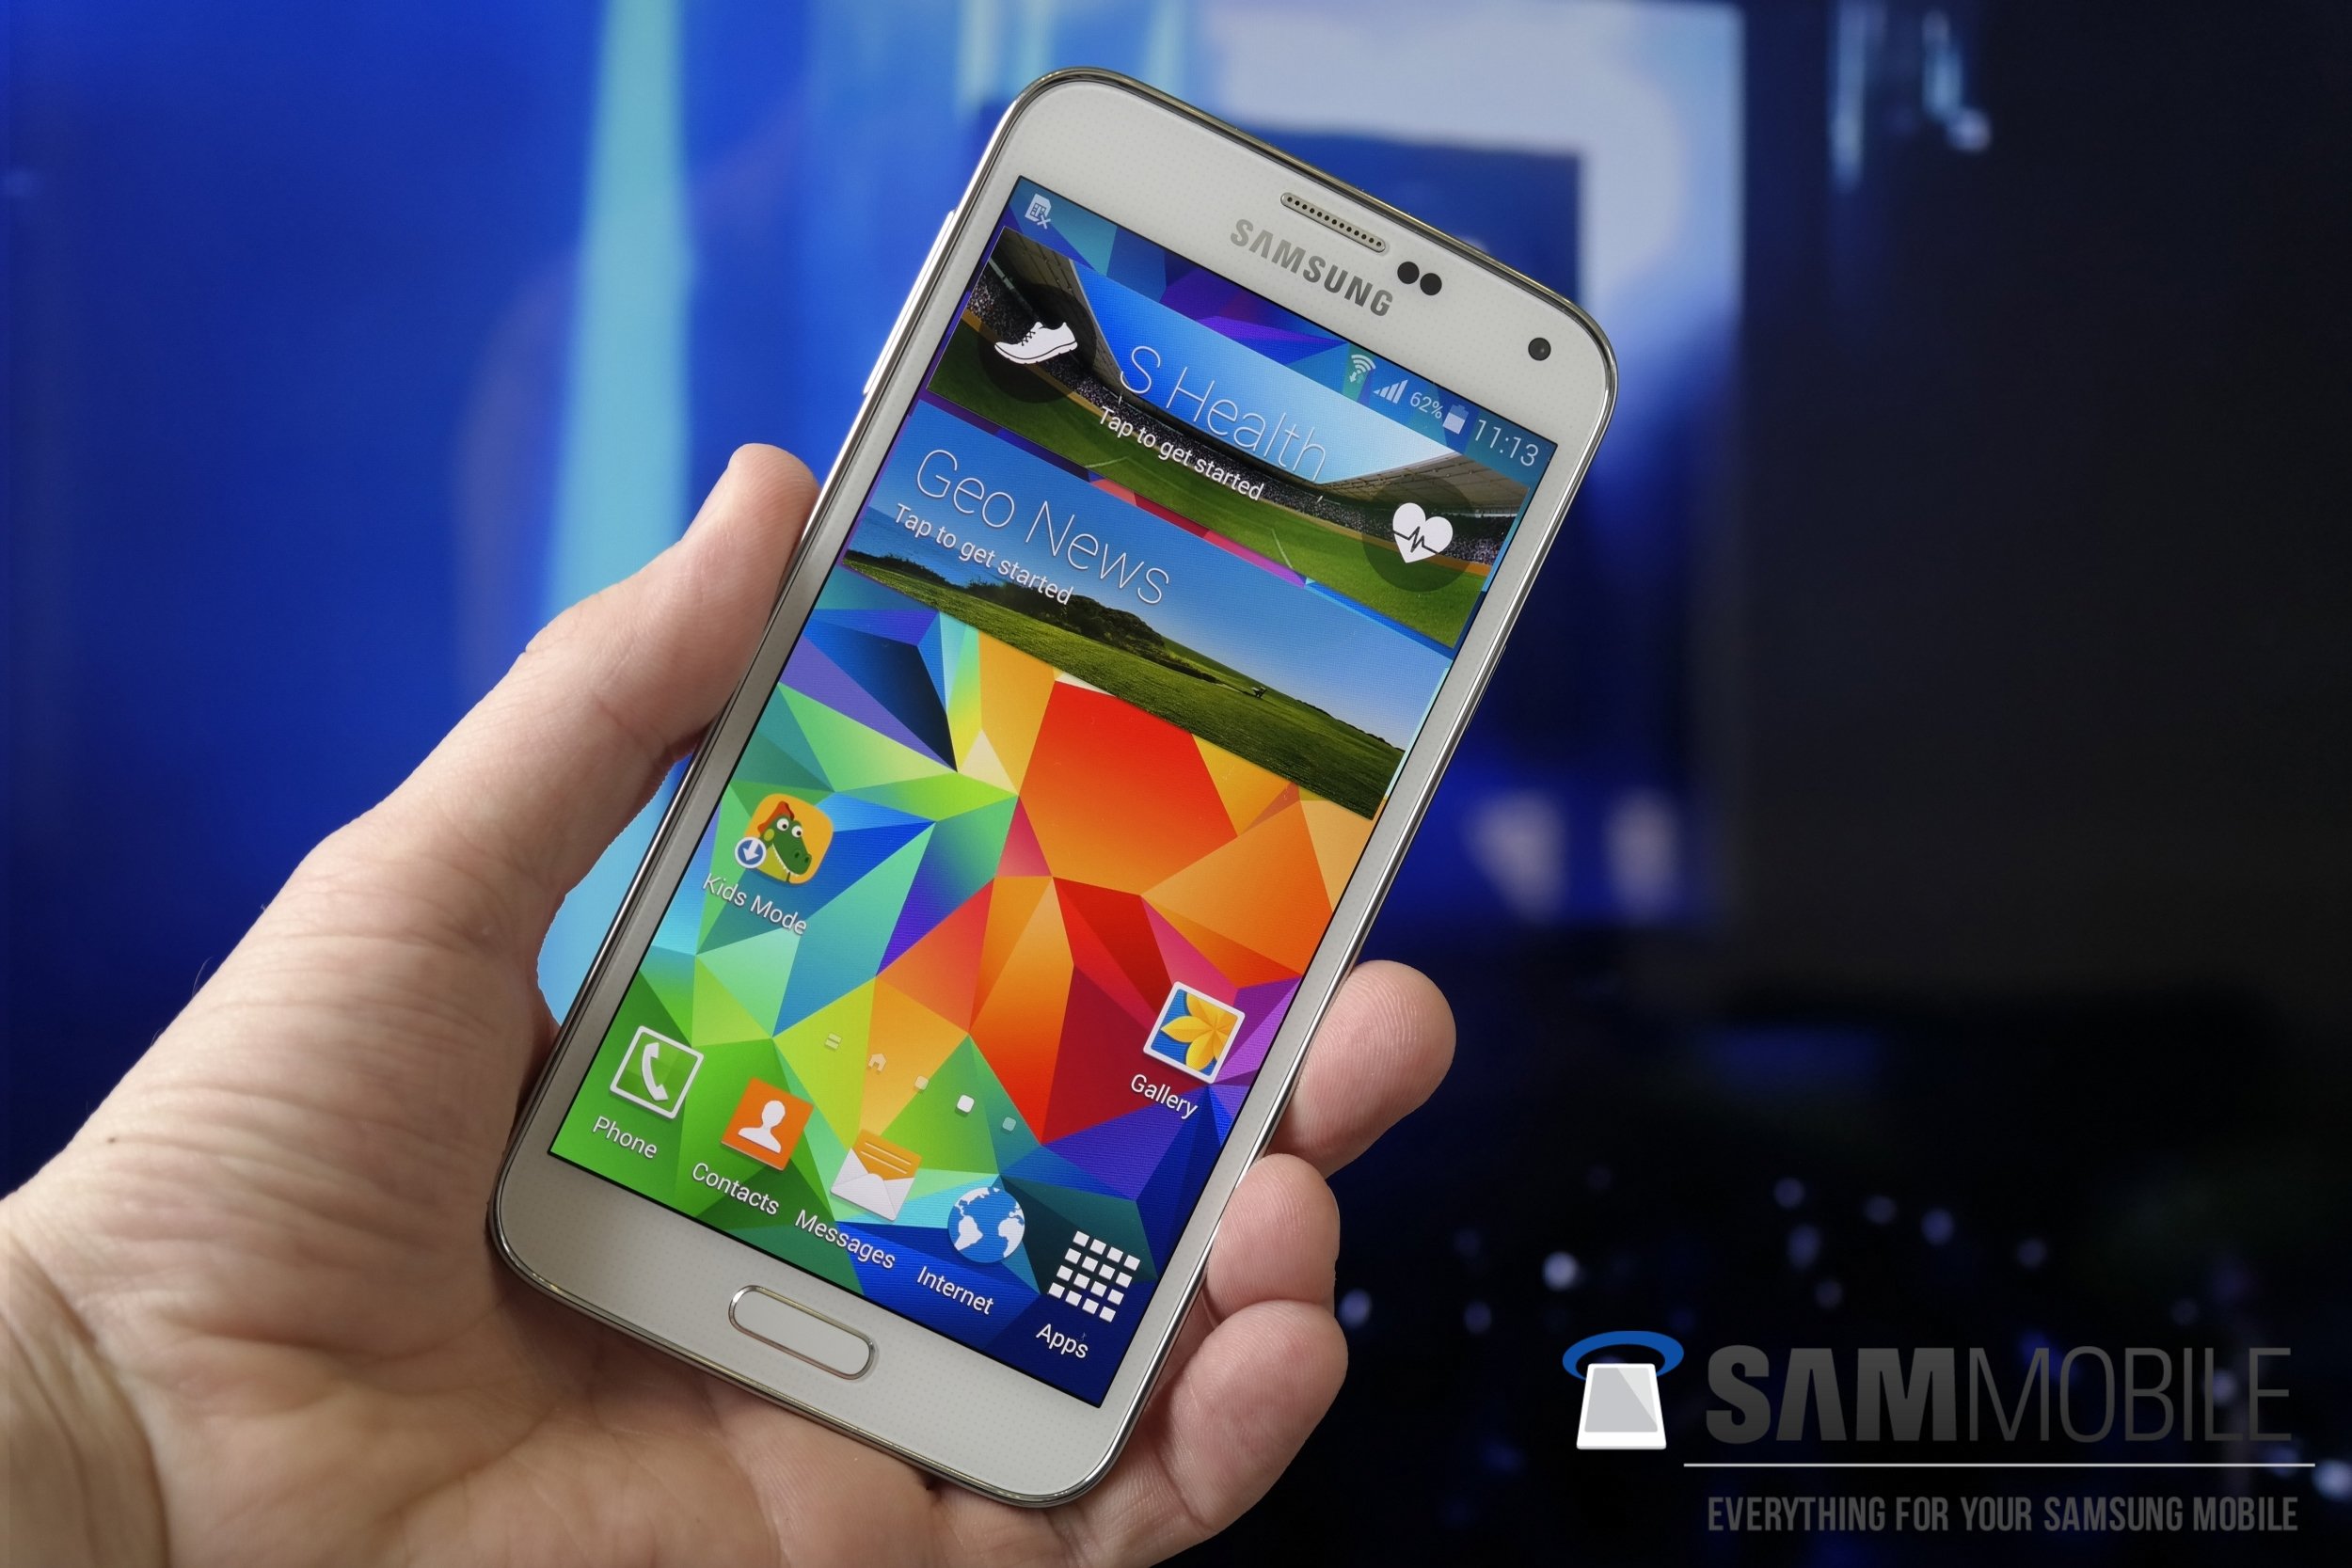 Samsung S7 Plus 5g